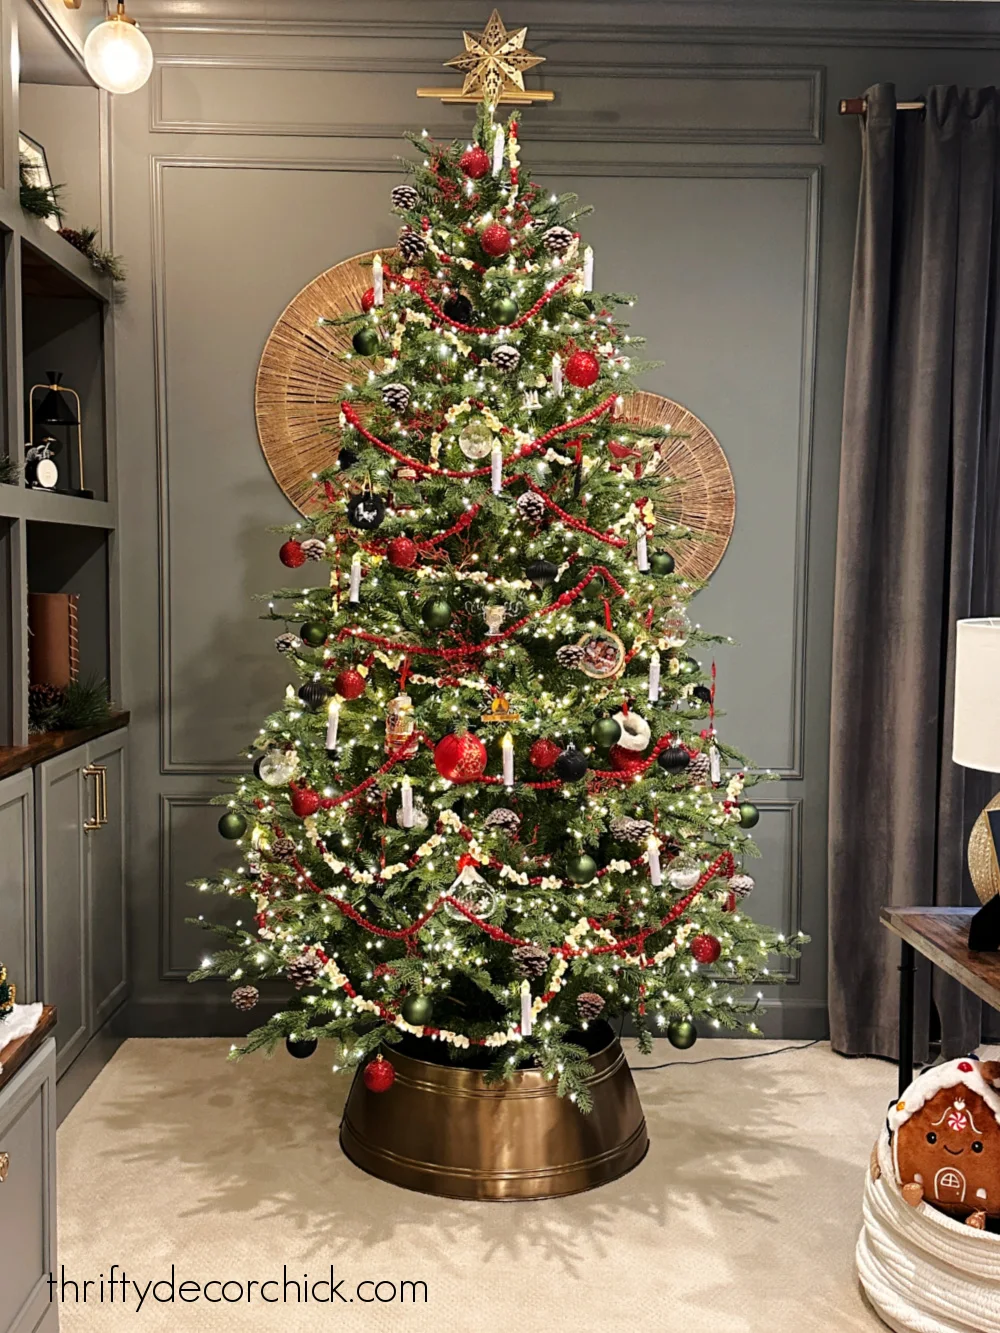 5 Straightforward Adorning Ideas for a Stunning Christmas Tree | Thrifty Decor Chick